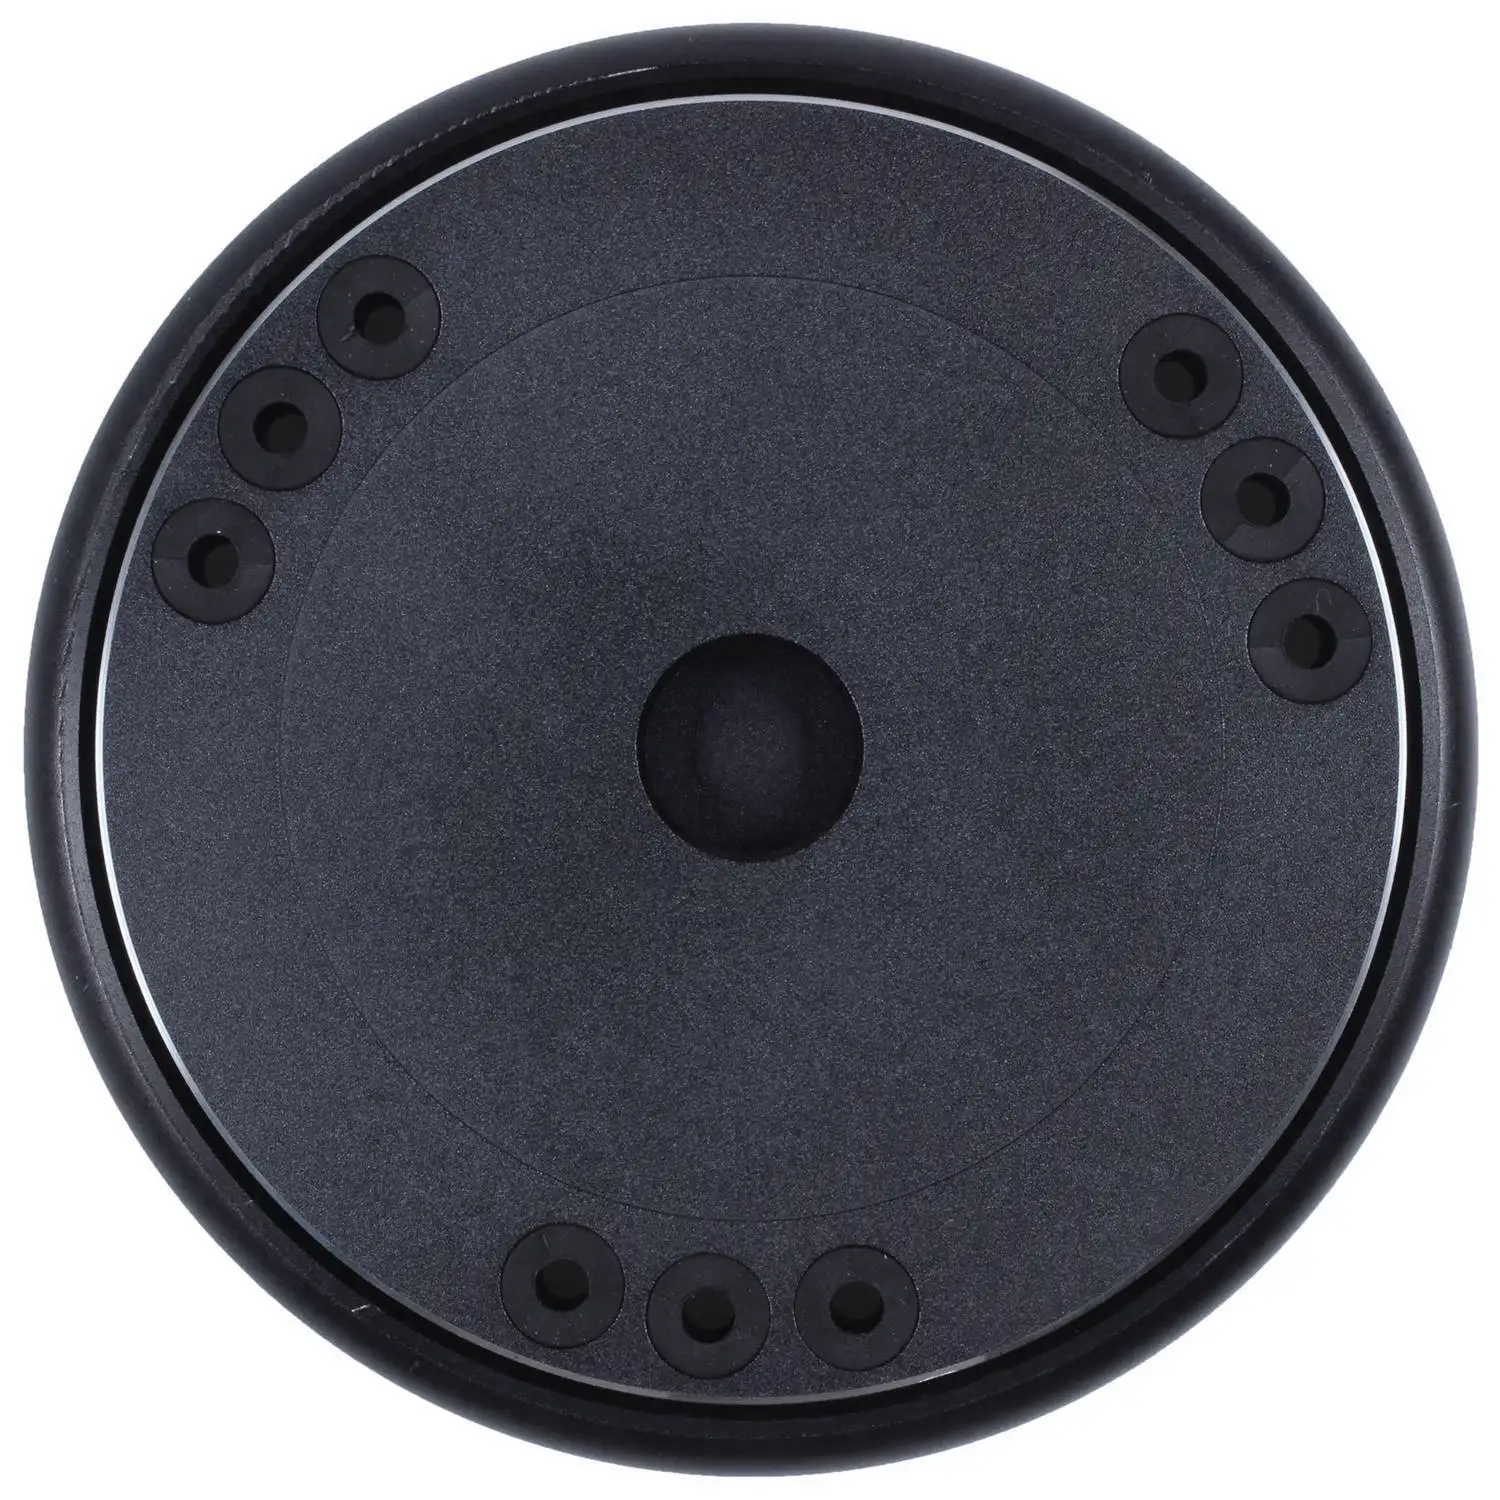 

Sound Isolation Platform Damping Recoil Pad For Apple Homepod Amazon Echo Google Home Stabilizer Smart Speaker Riser Base(Black)